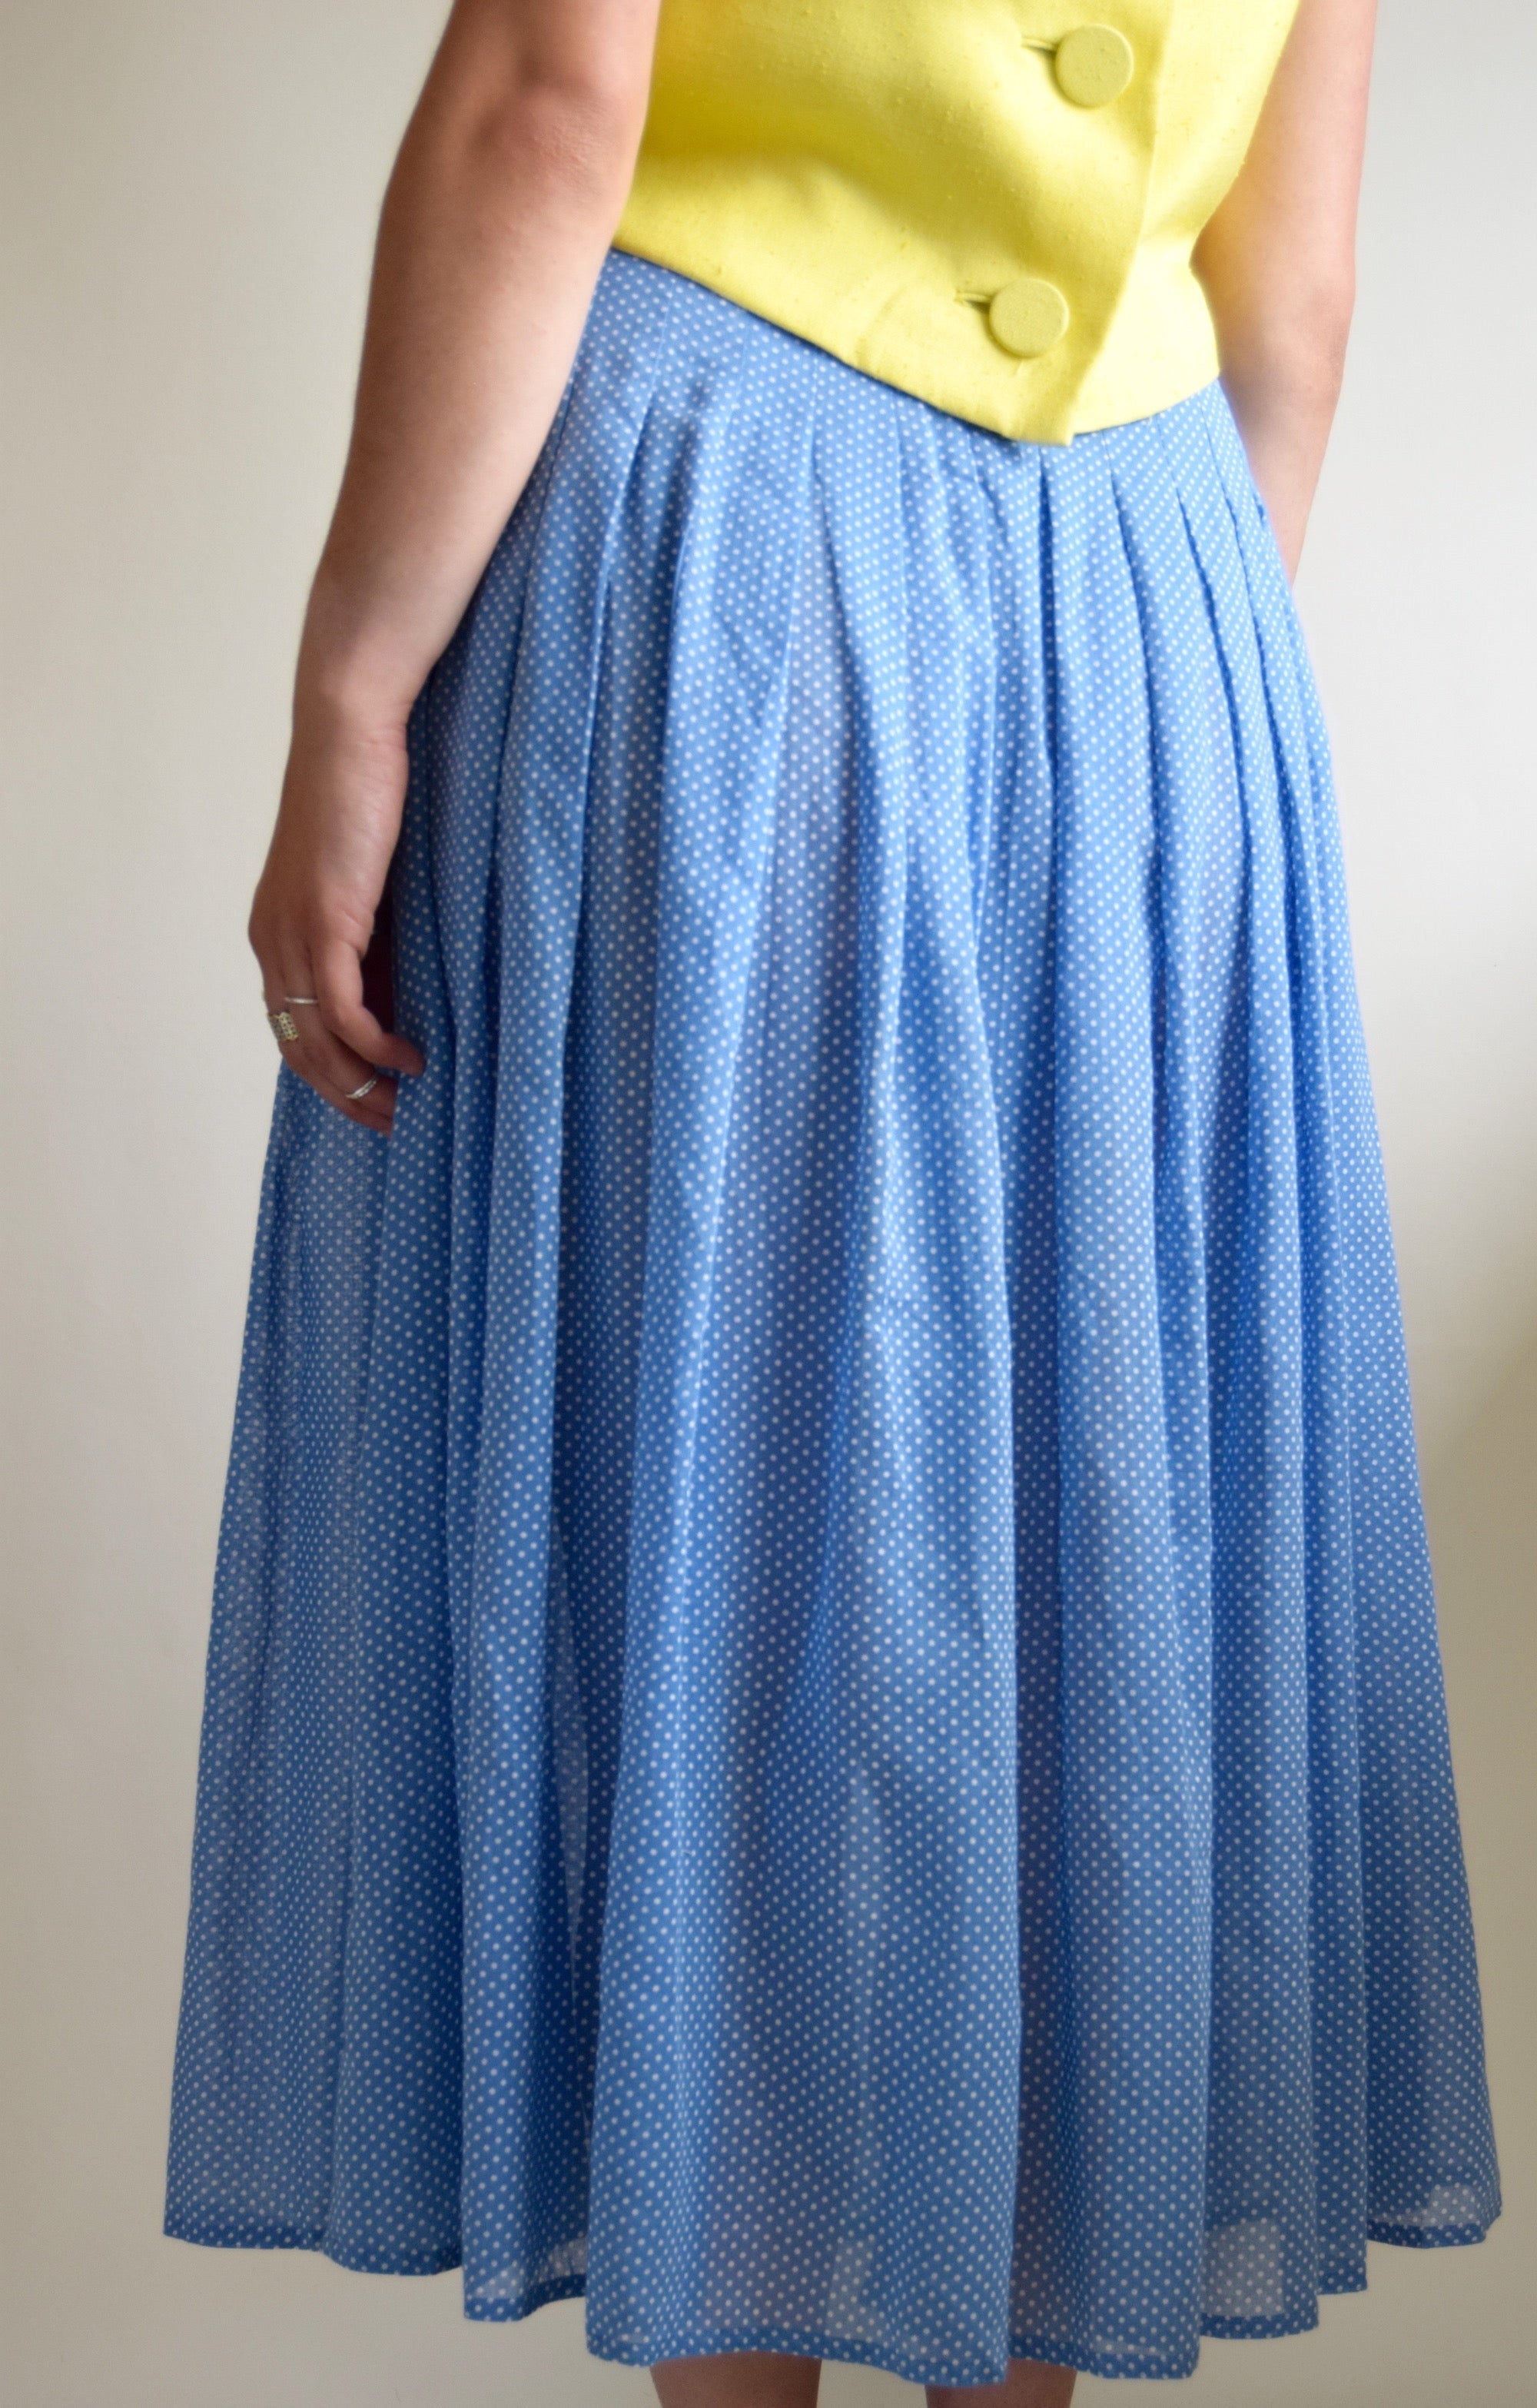 Vintage Lizsport Cotton Polka Dot Midi Skirt